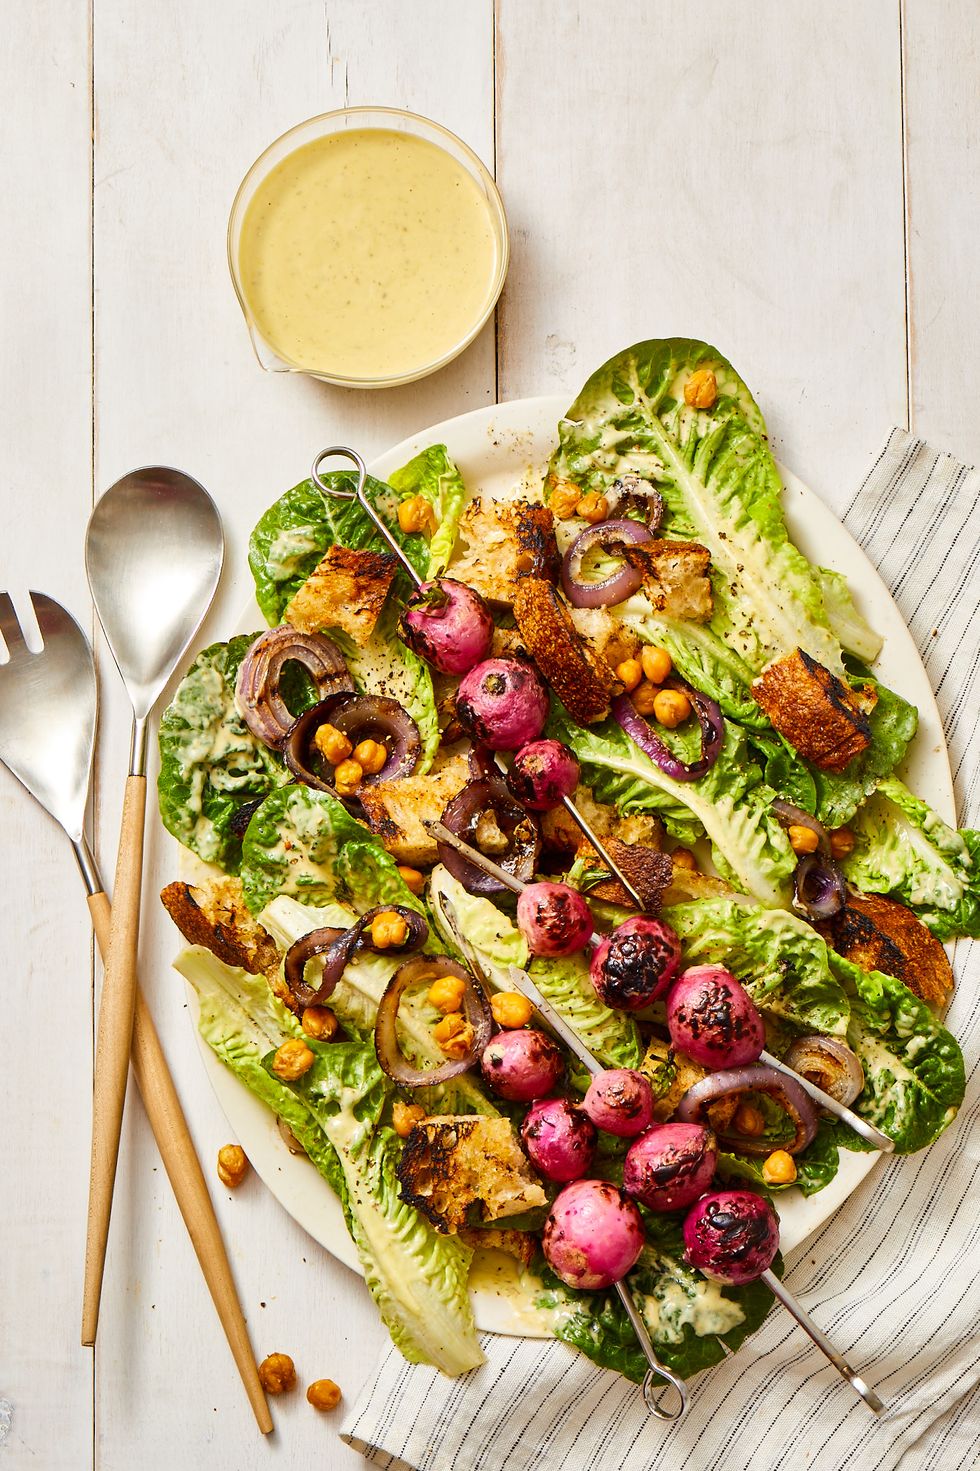 15 Healthy Salad Dressing Recipes - Homemade Salad Dressings